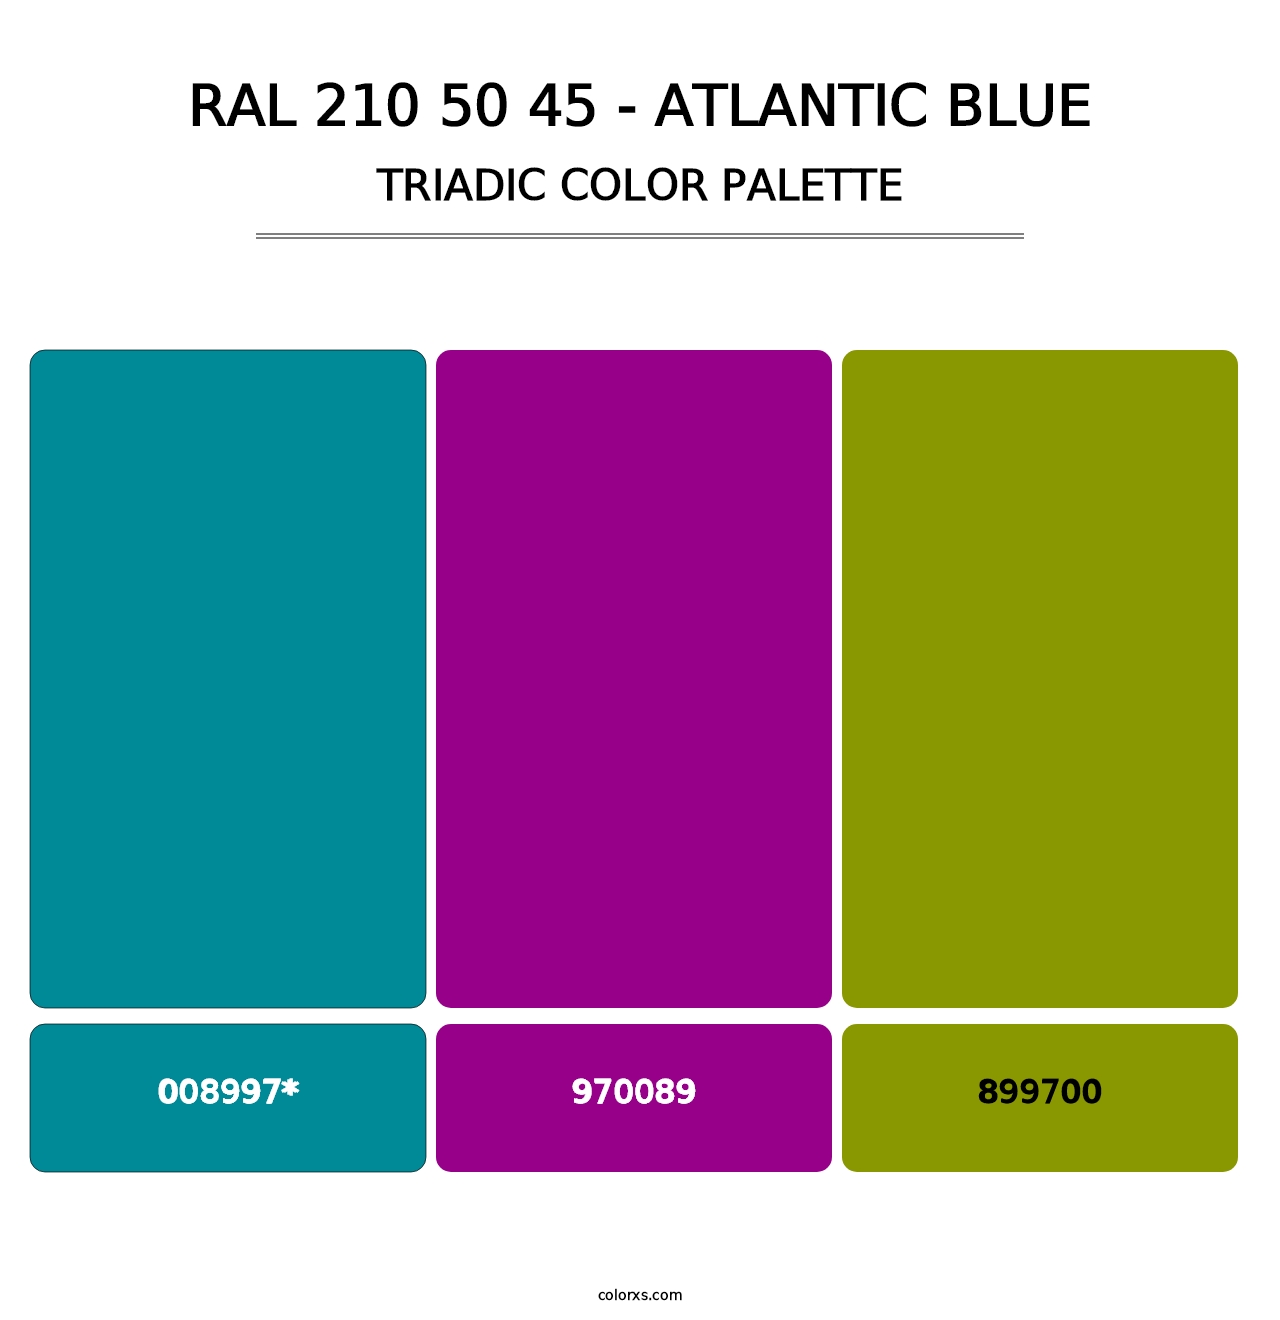 RAL 210 50 45 - Atlantic Blue - Triadic Color Palette